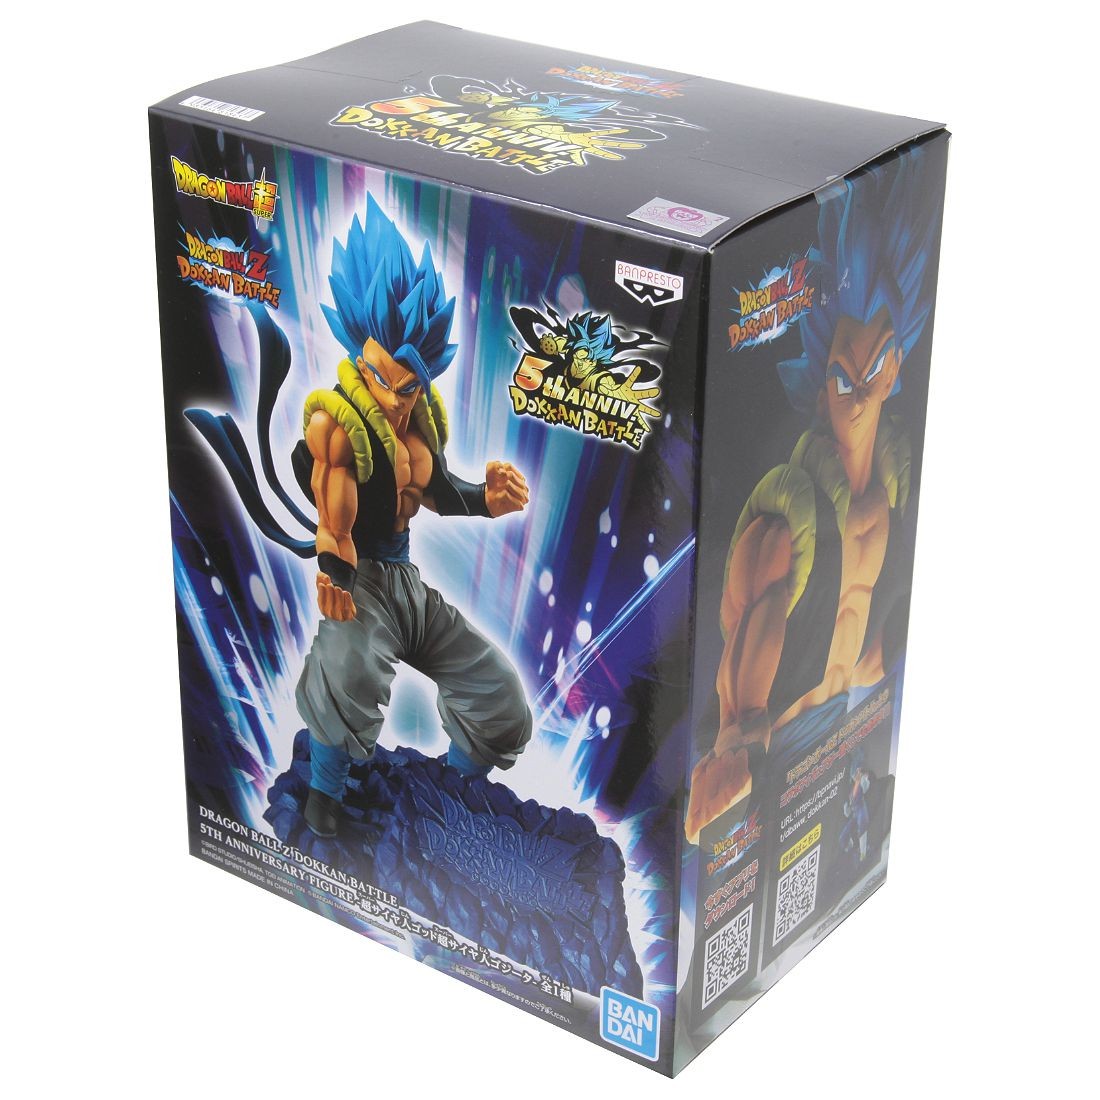 ETERSTARLY 9 Dragon Ball Z Super Saiyan Gogeta Figure Anime Collectible  Model Toy Gift,Blue 